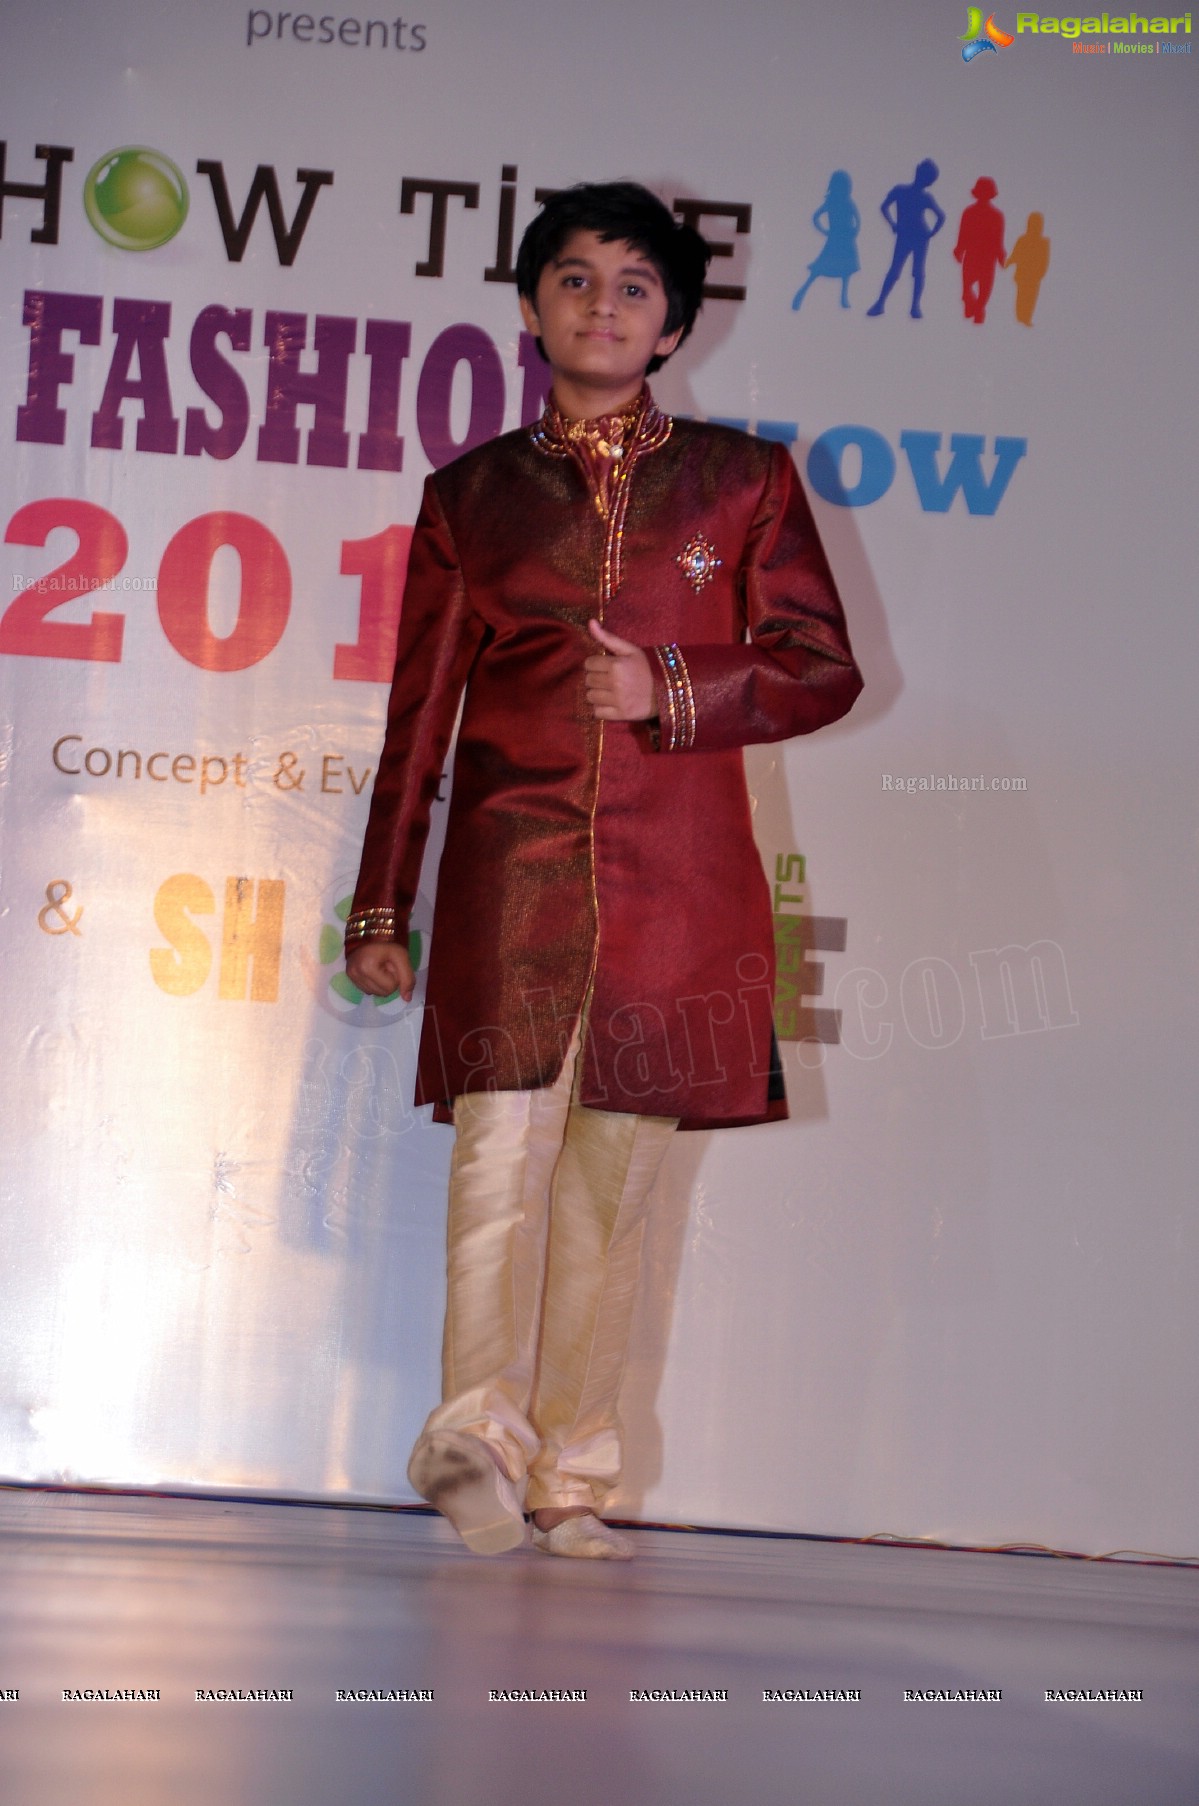 Kalanjali Kids Fashion Show 2012 by Sunny Anand and Srikanth Gatla